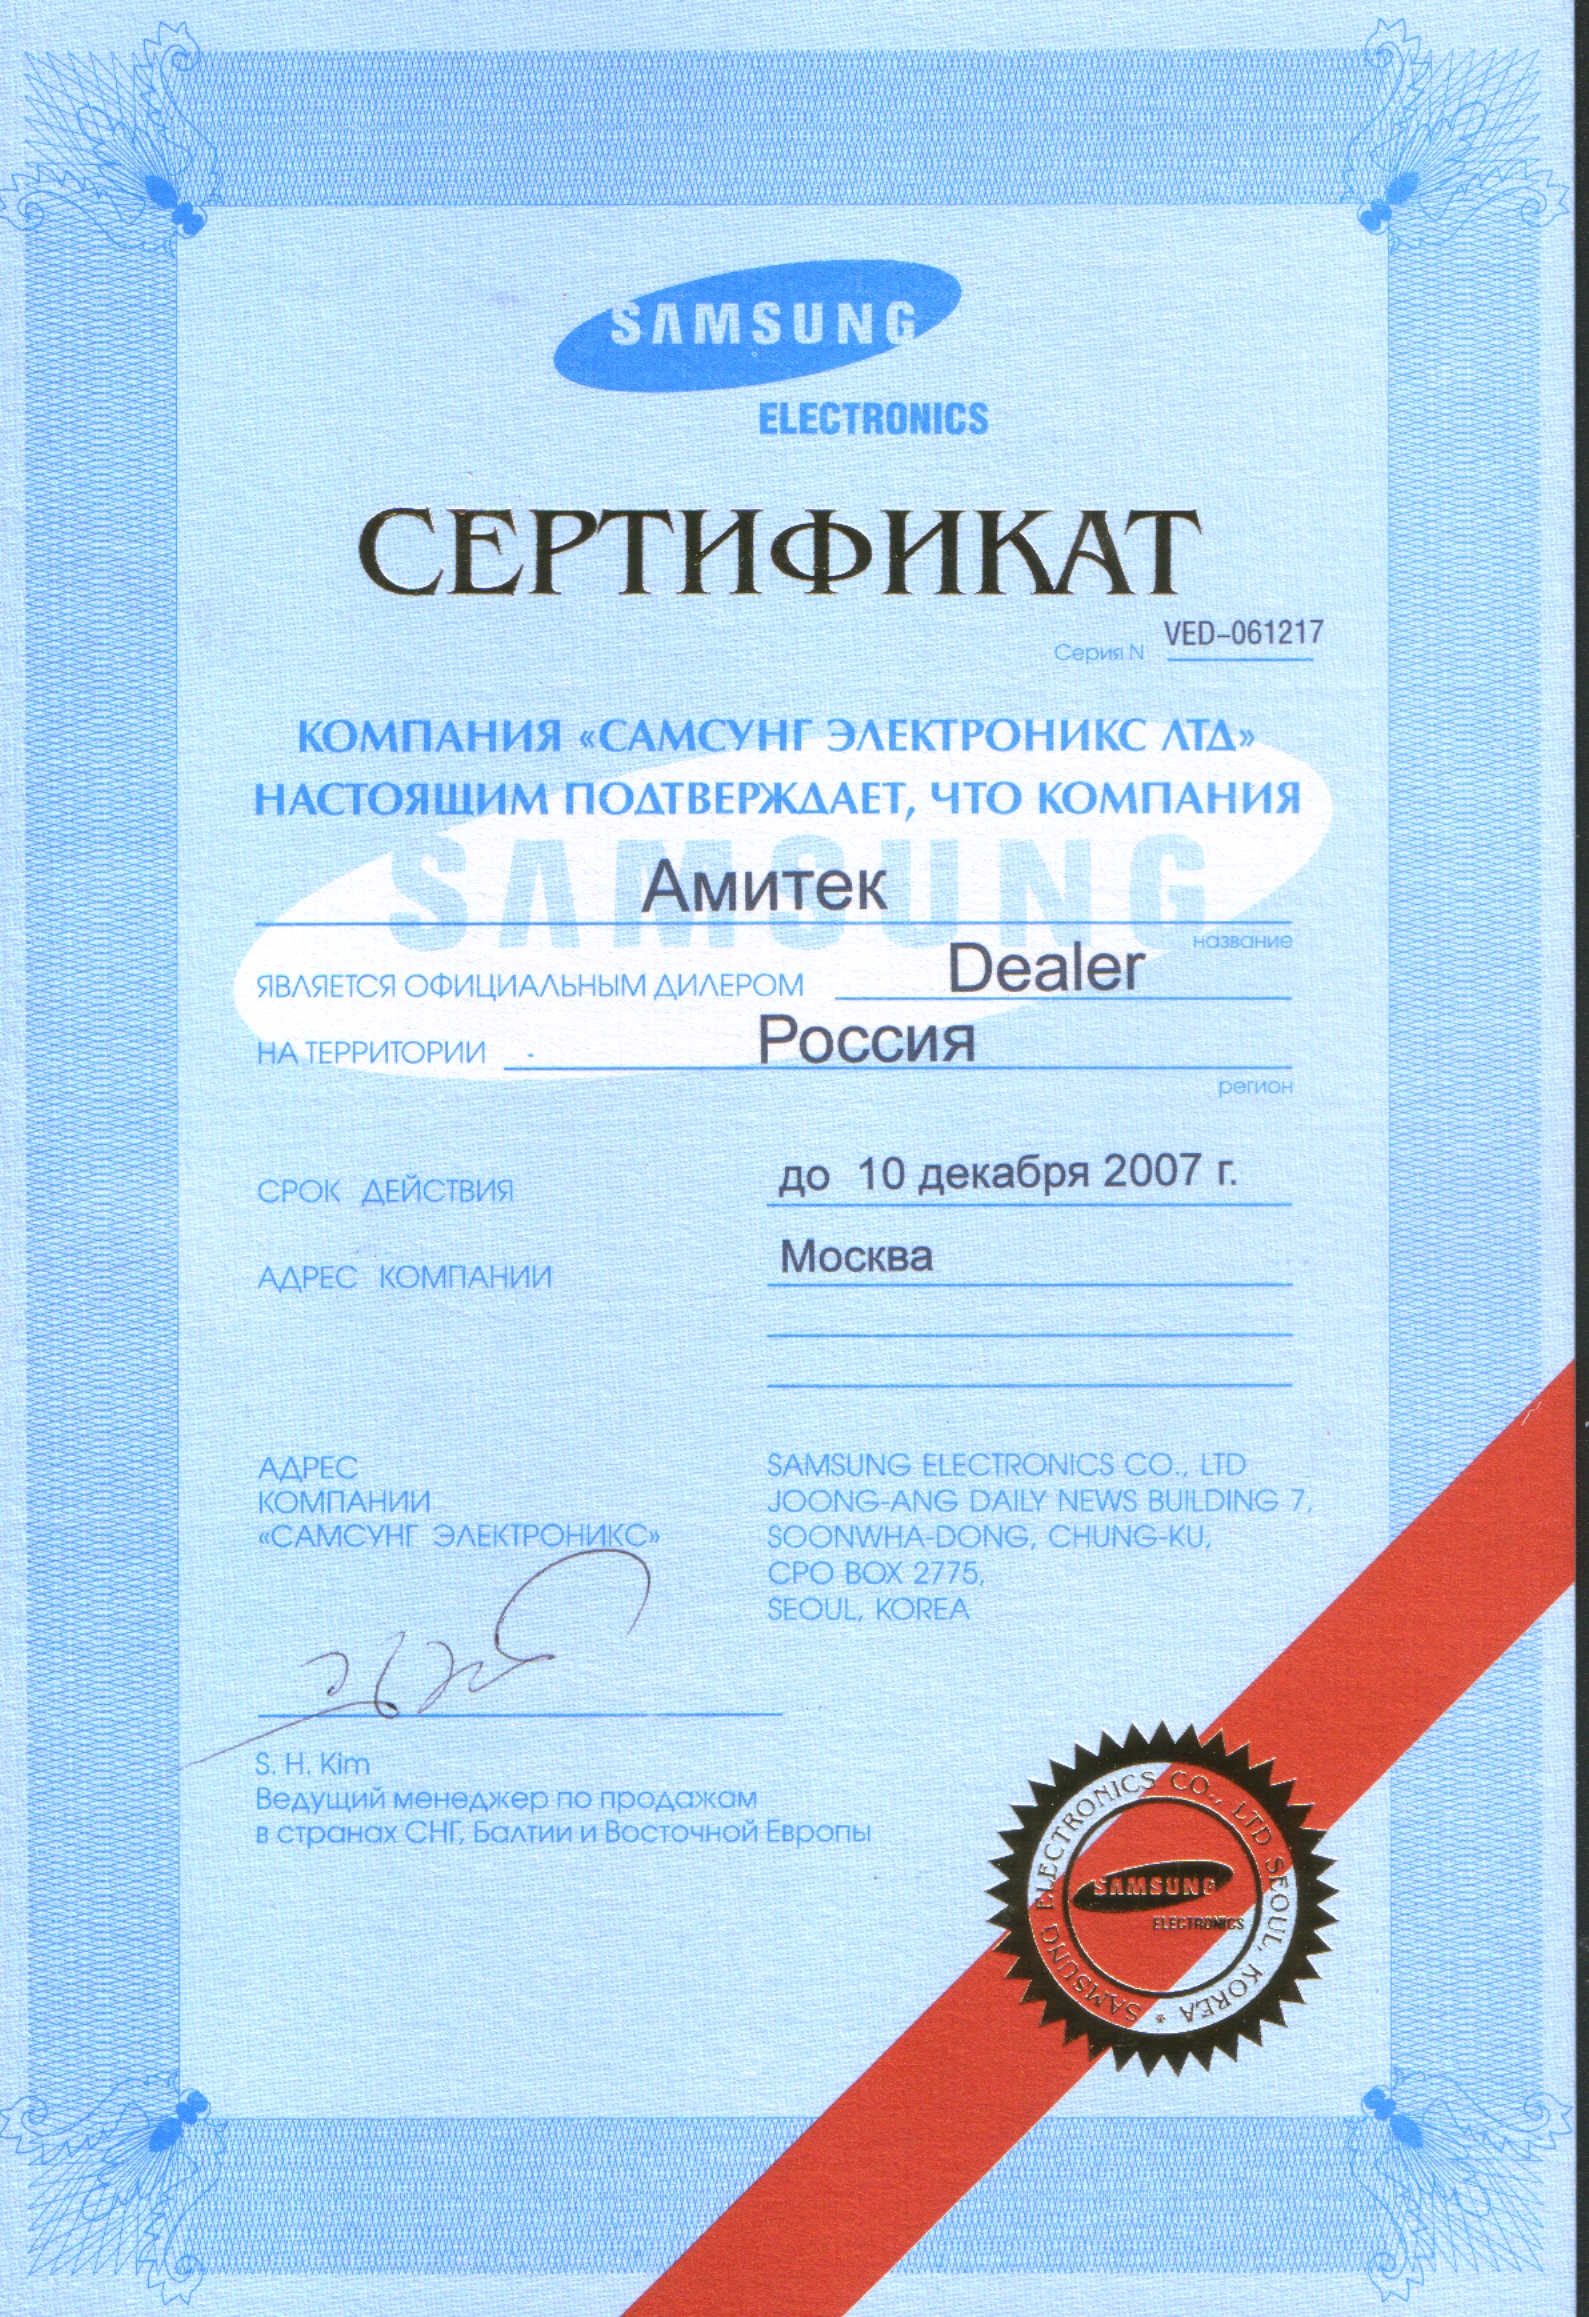 Ооо самсунг электроникс. Сертификат Samsung. Сертификат компании Samsung Electronics.. Samsung сертификат партнера.